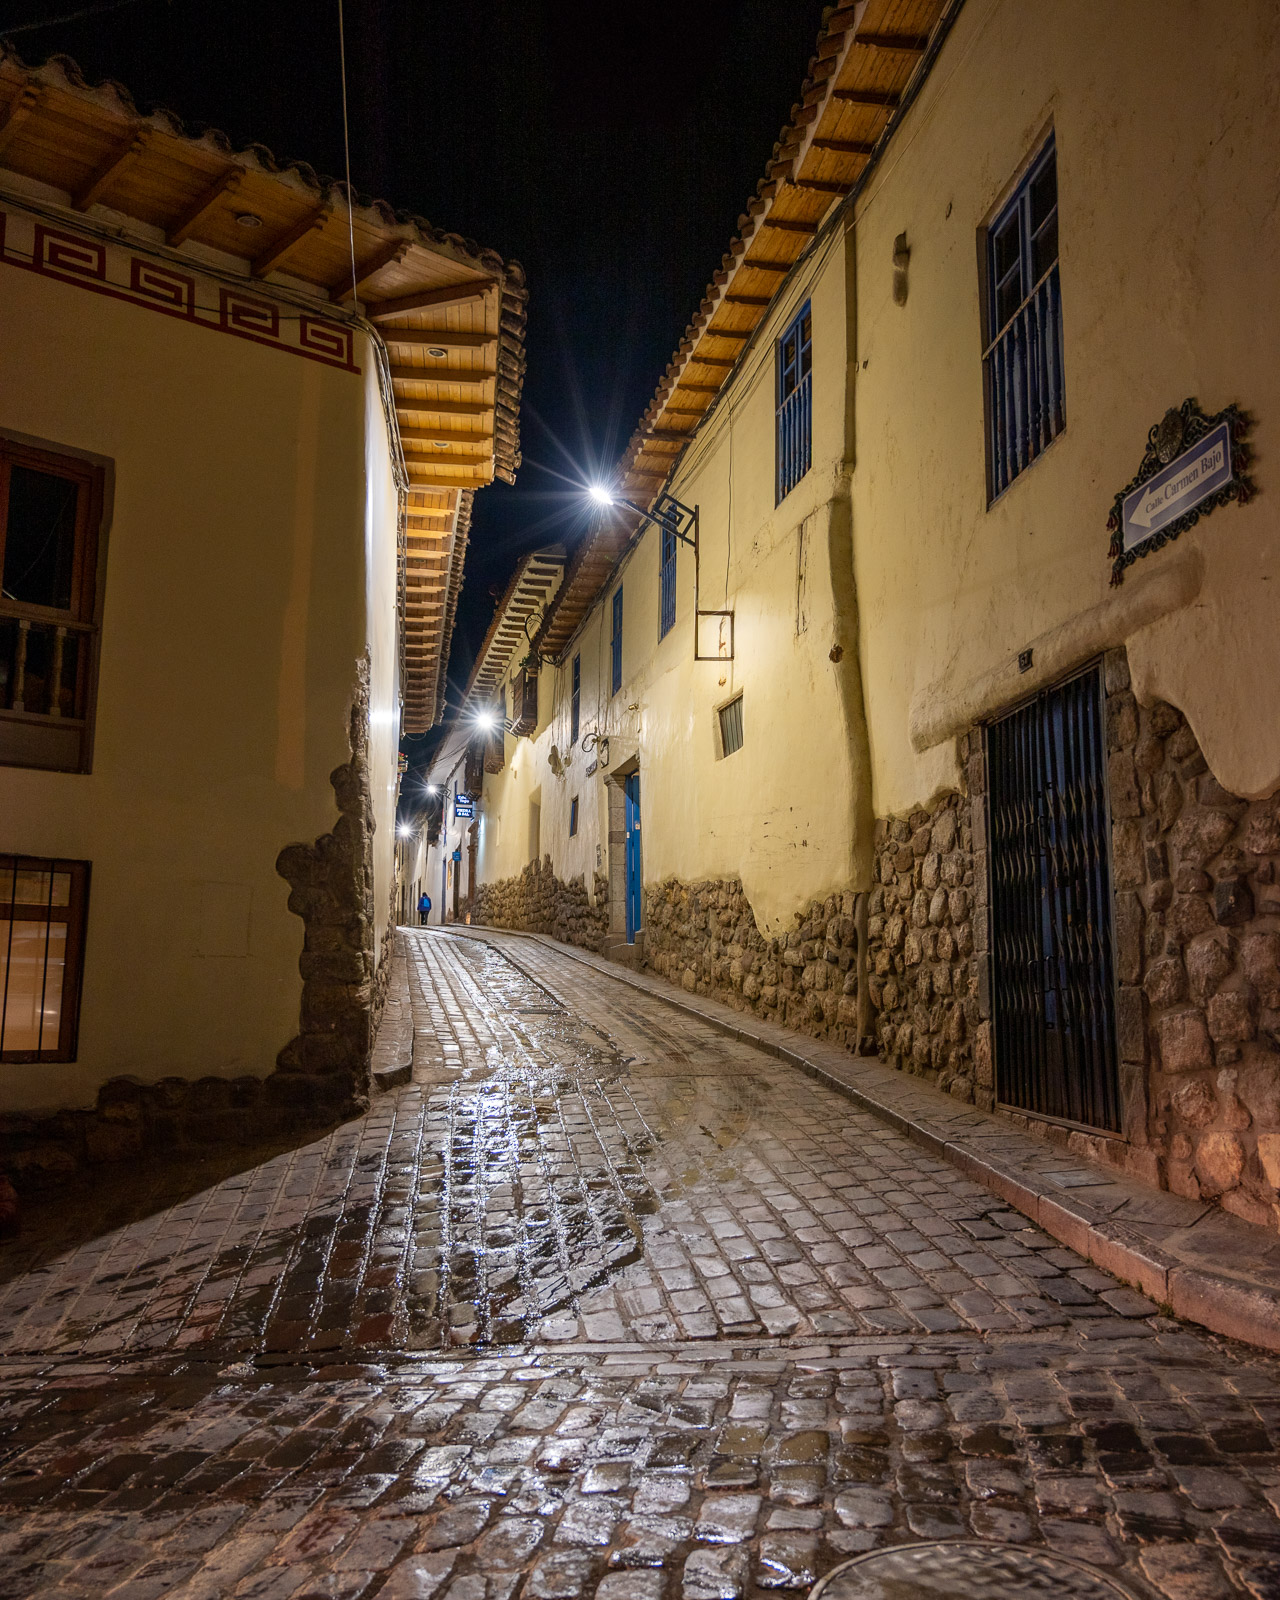 Streetlights shine on cobblestone streets in the San Blas district of Cusco